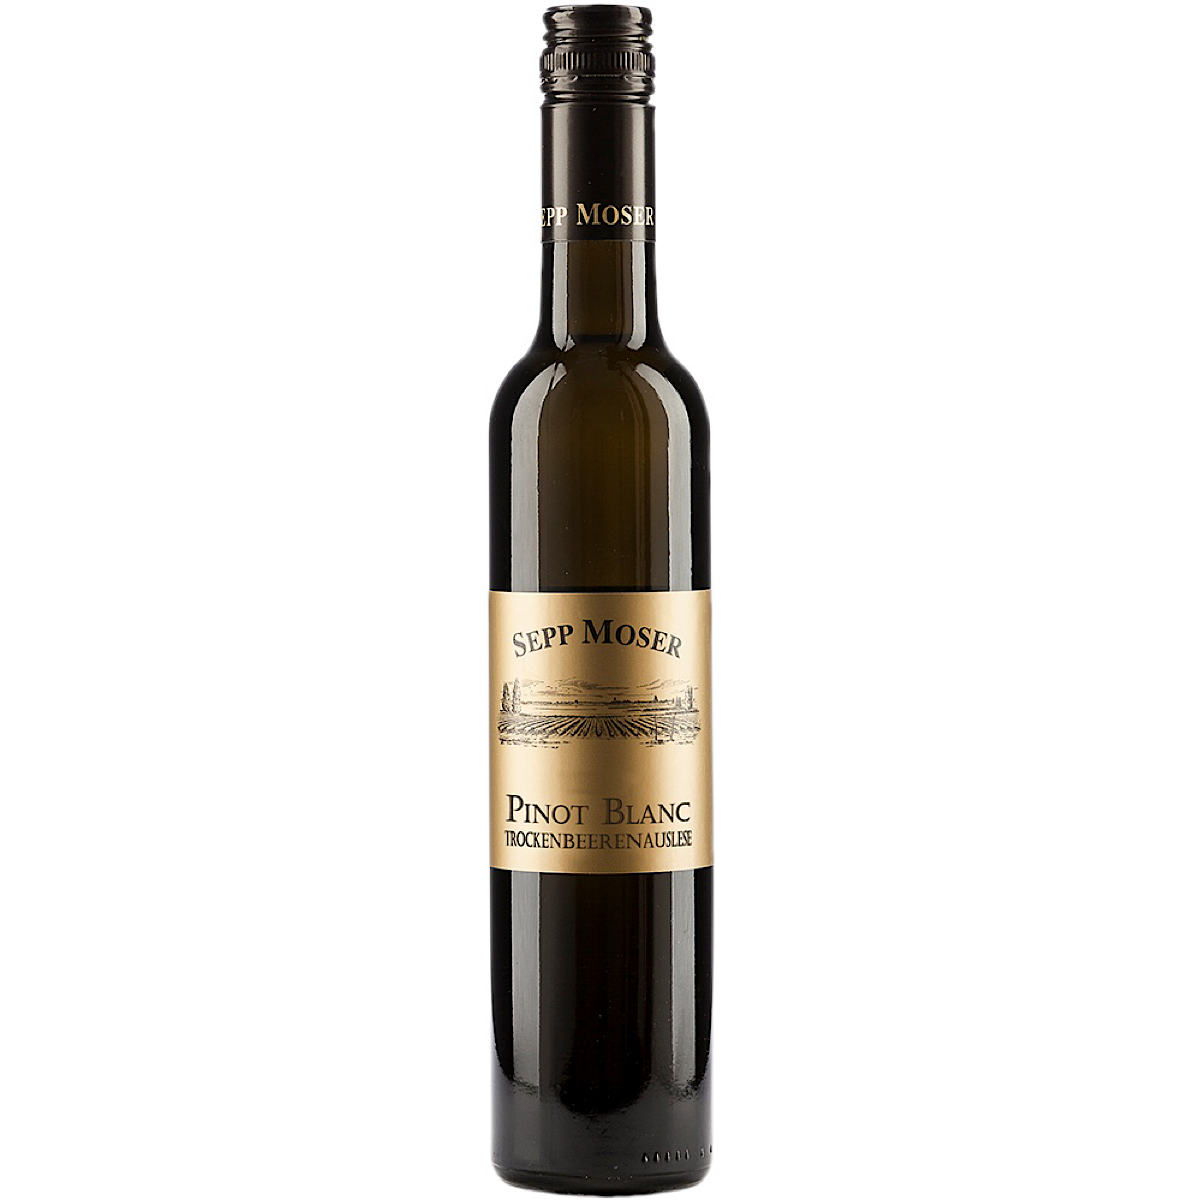 Sepp Moser Pinot Blanc Trockenbeerenauslese 6 Bottle Case 75cl